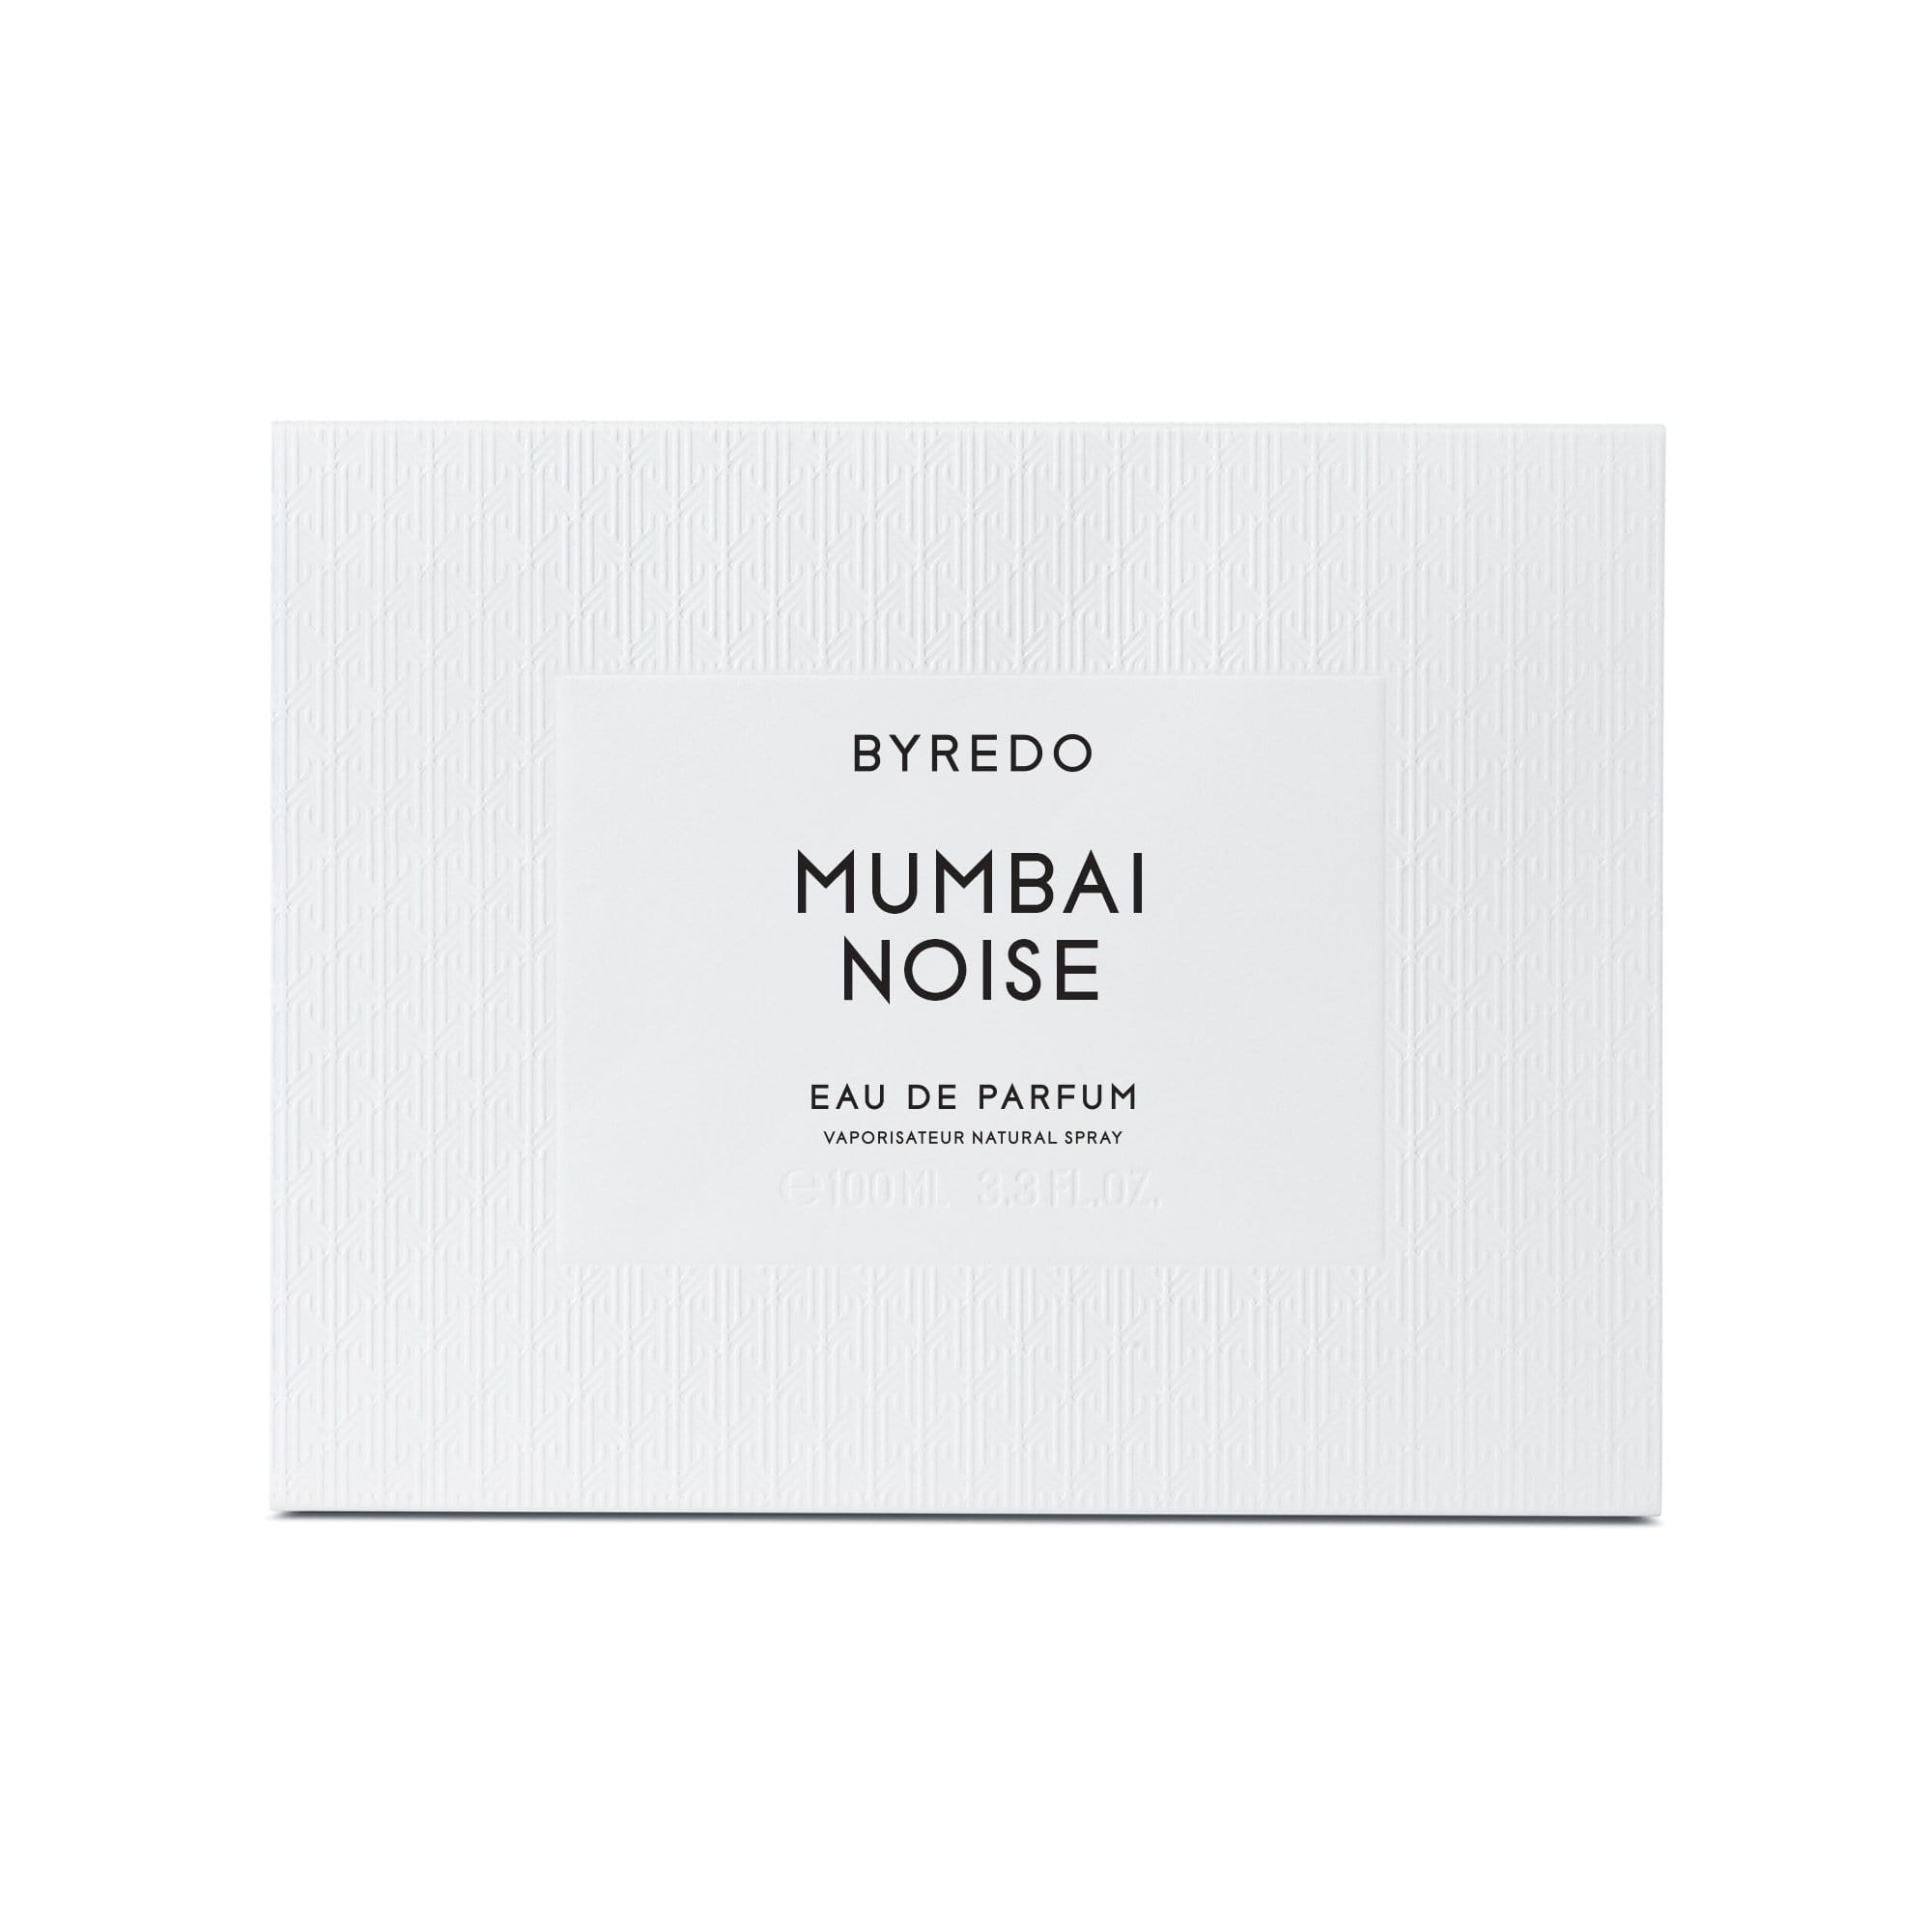 Mumbai Noise de BYREDO Eau de Parfum